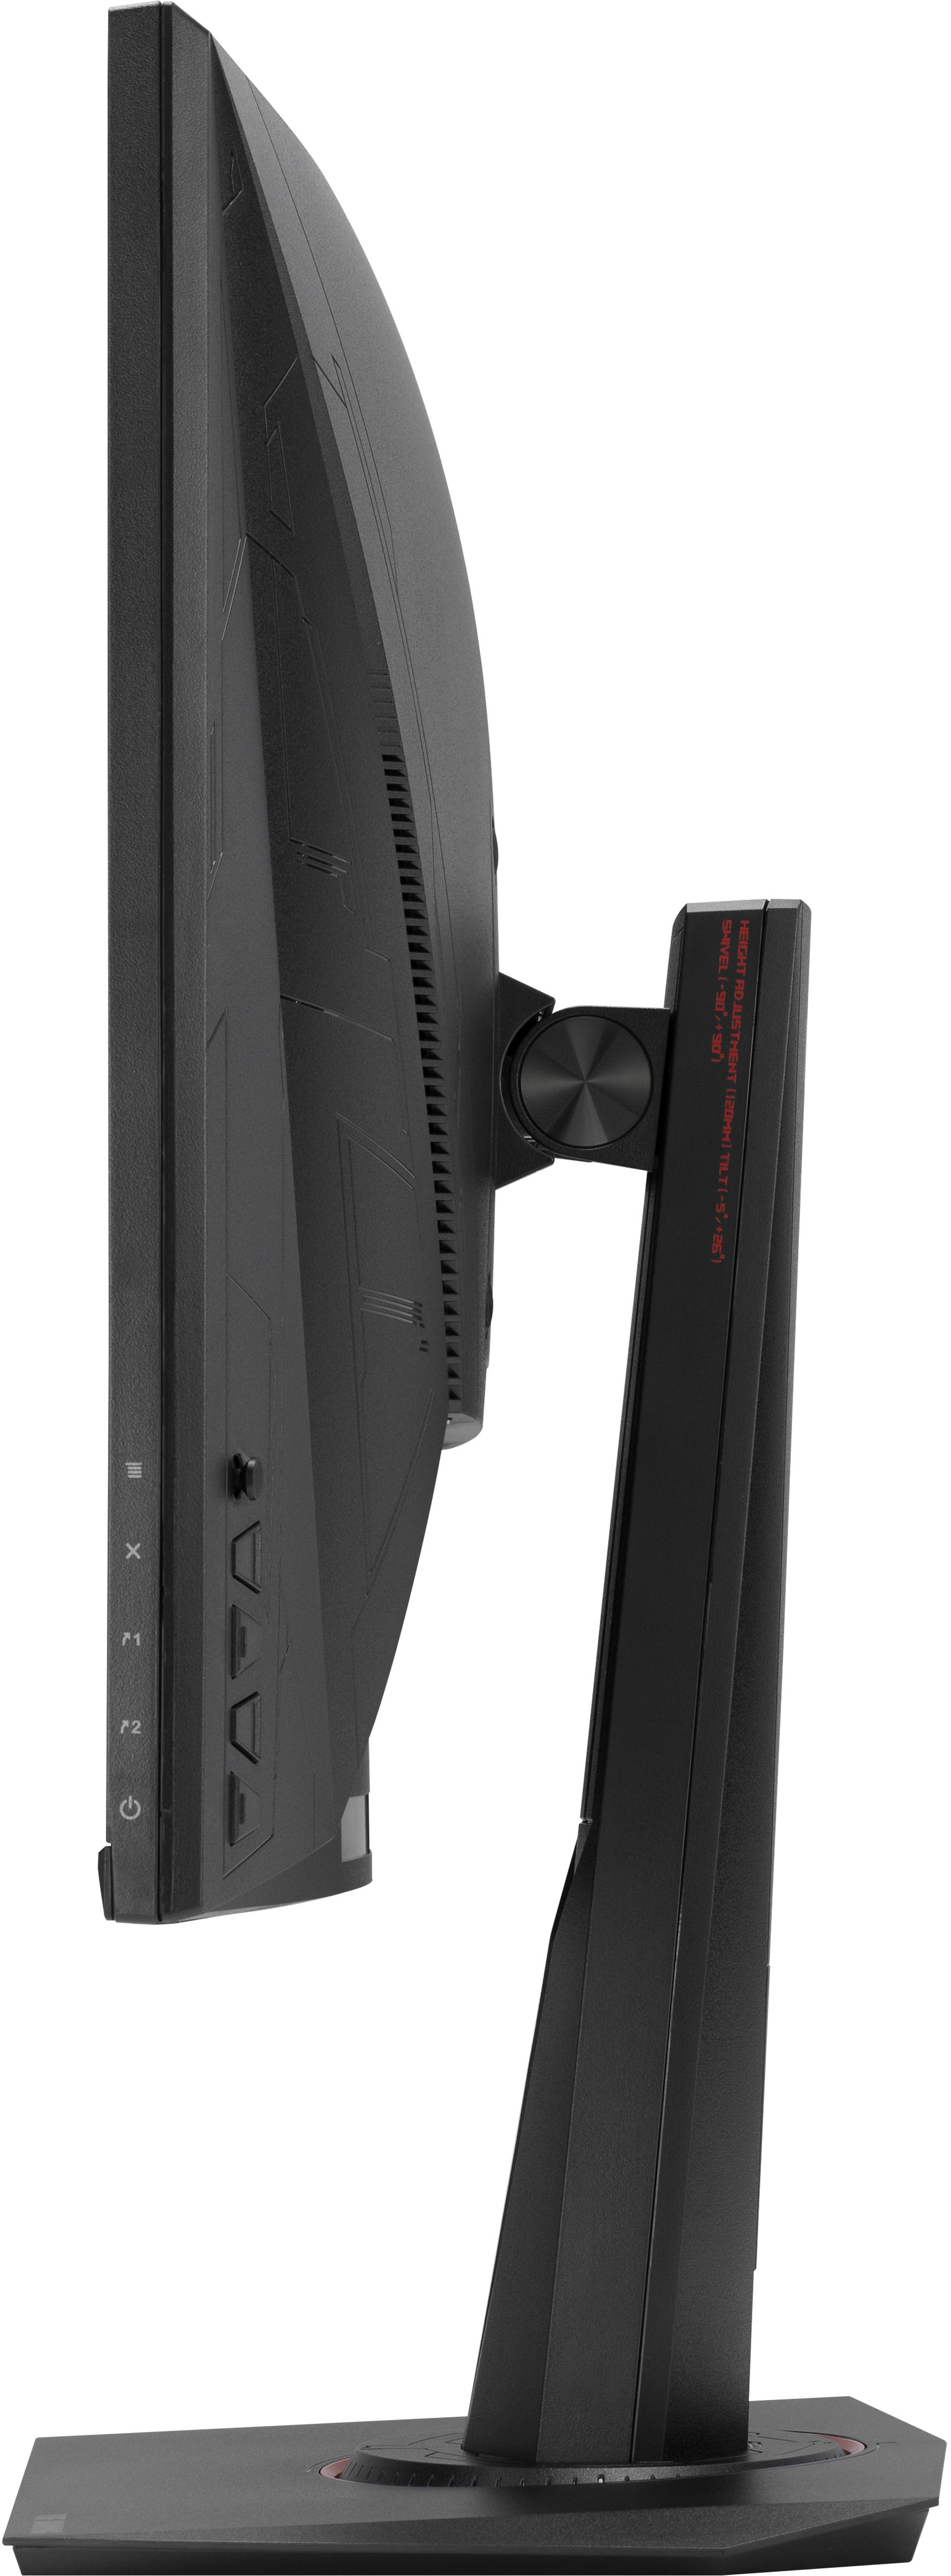 ASUS TUF Gaming 27 IPS FHD 1080P 165Hz 1ms FreeSync Premium Gaming Monitor  (2 x HDMI, DisplayPort) Black VG279Q1A - Best Buy